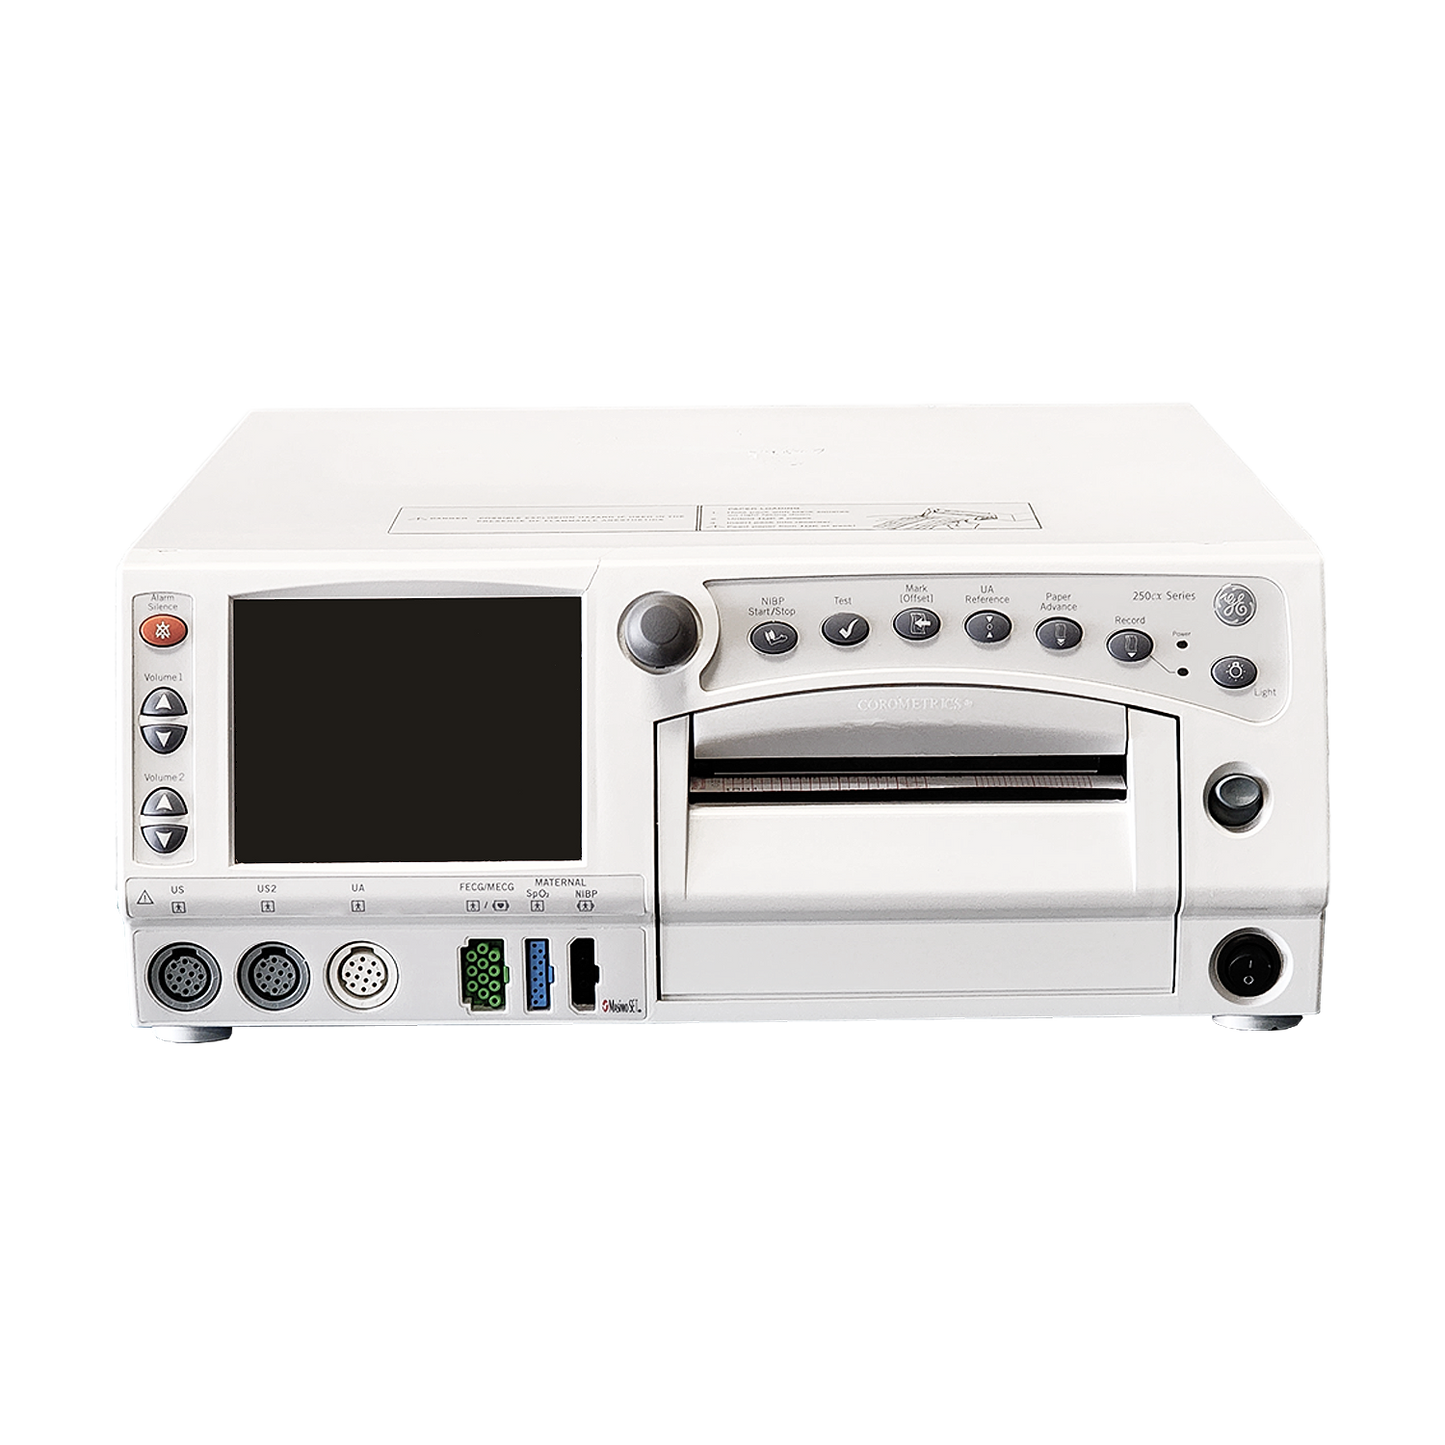 GE Corometrics 259CX Series Maternal/Fetal Monitor - Masimo